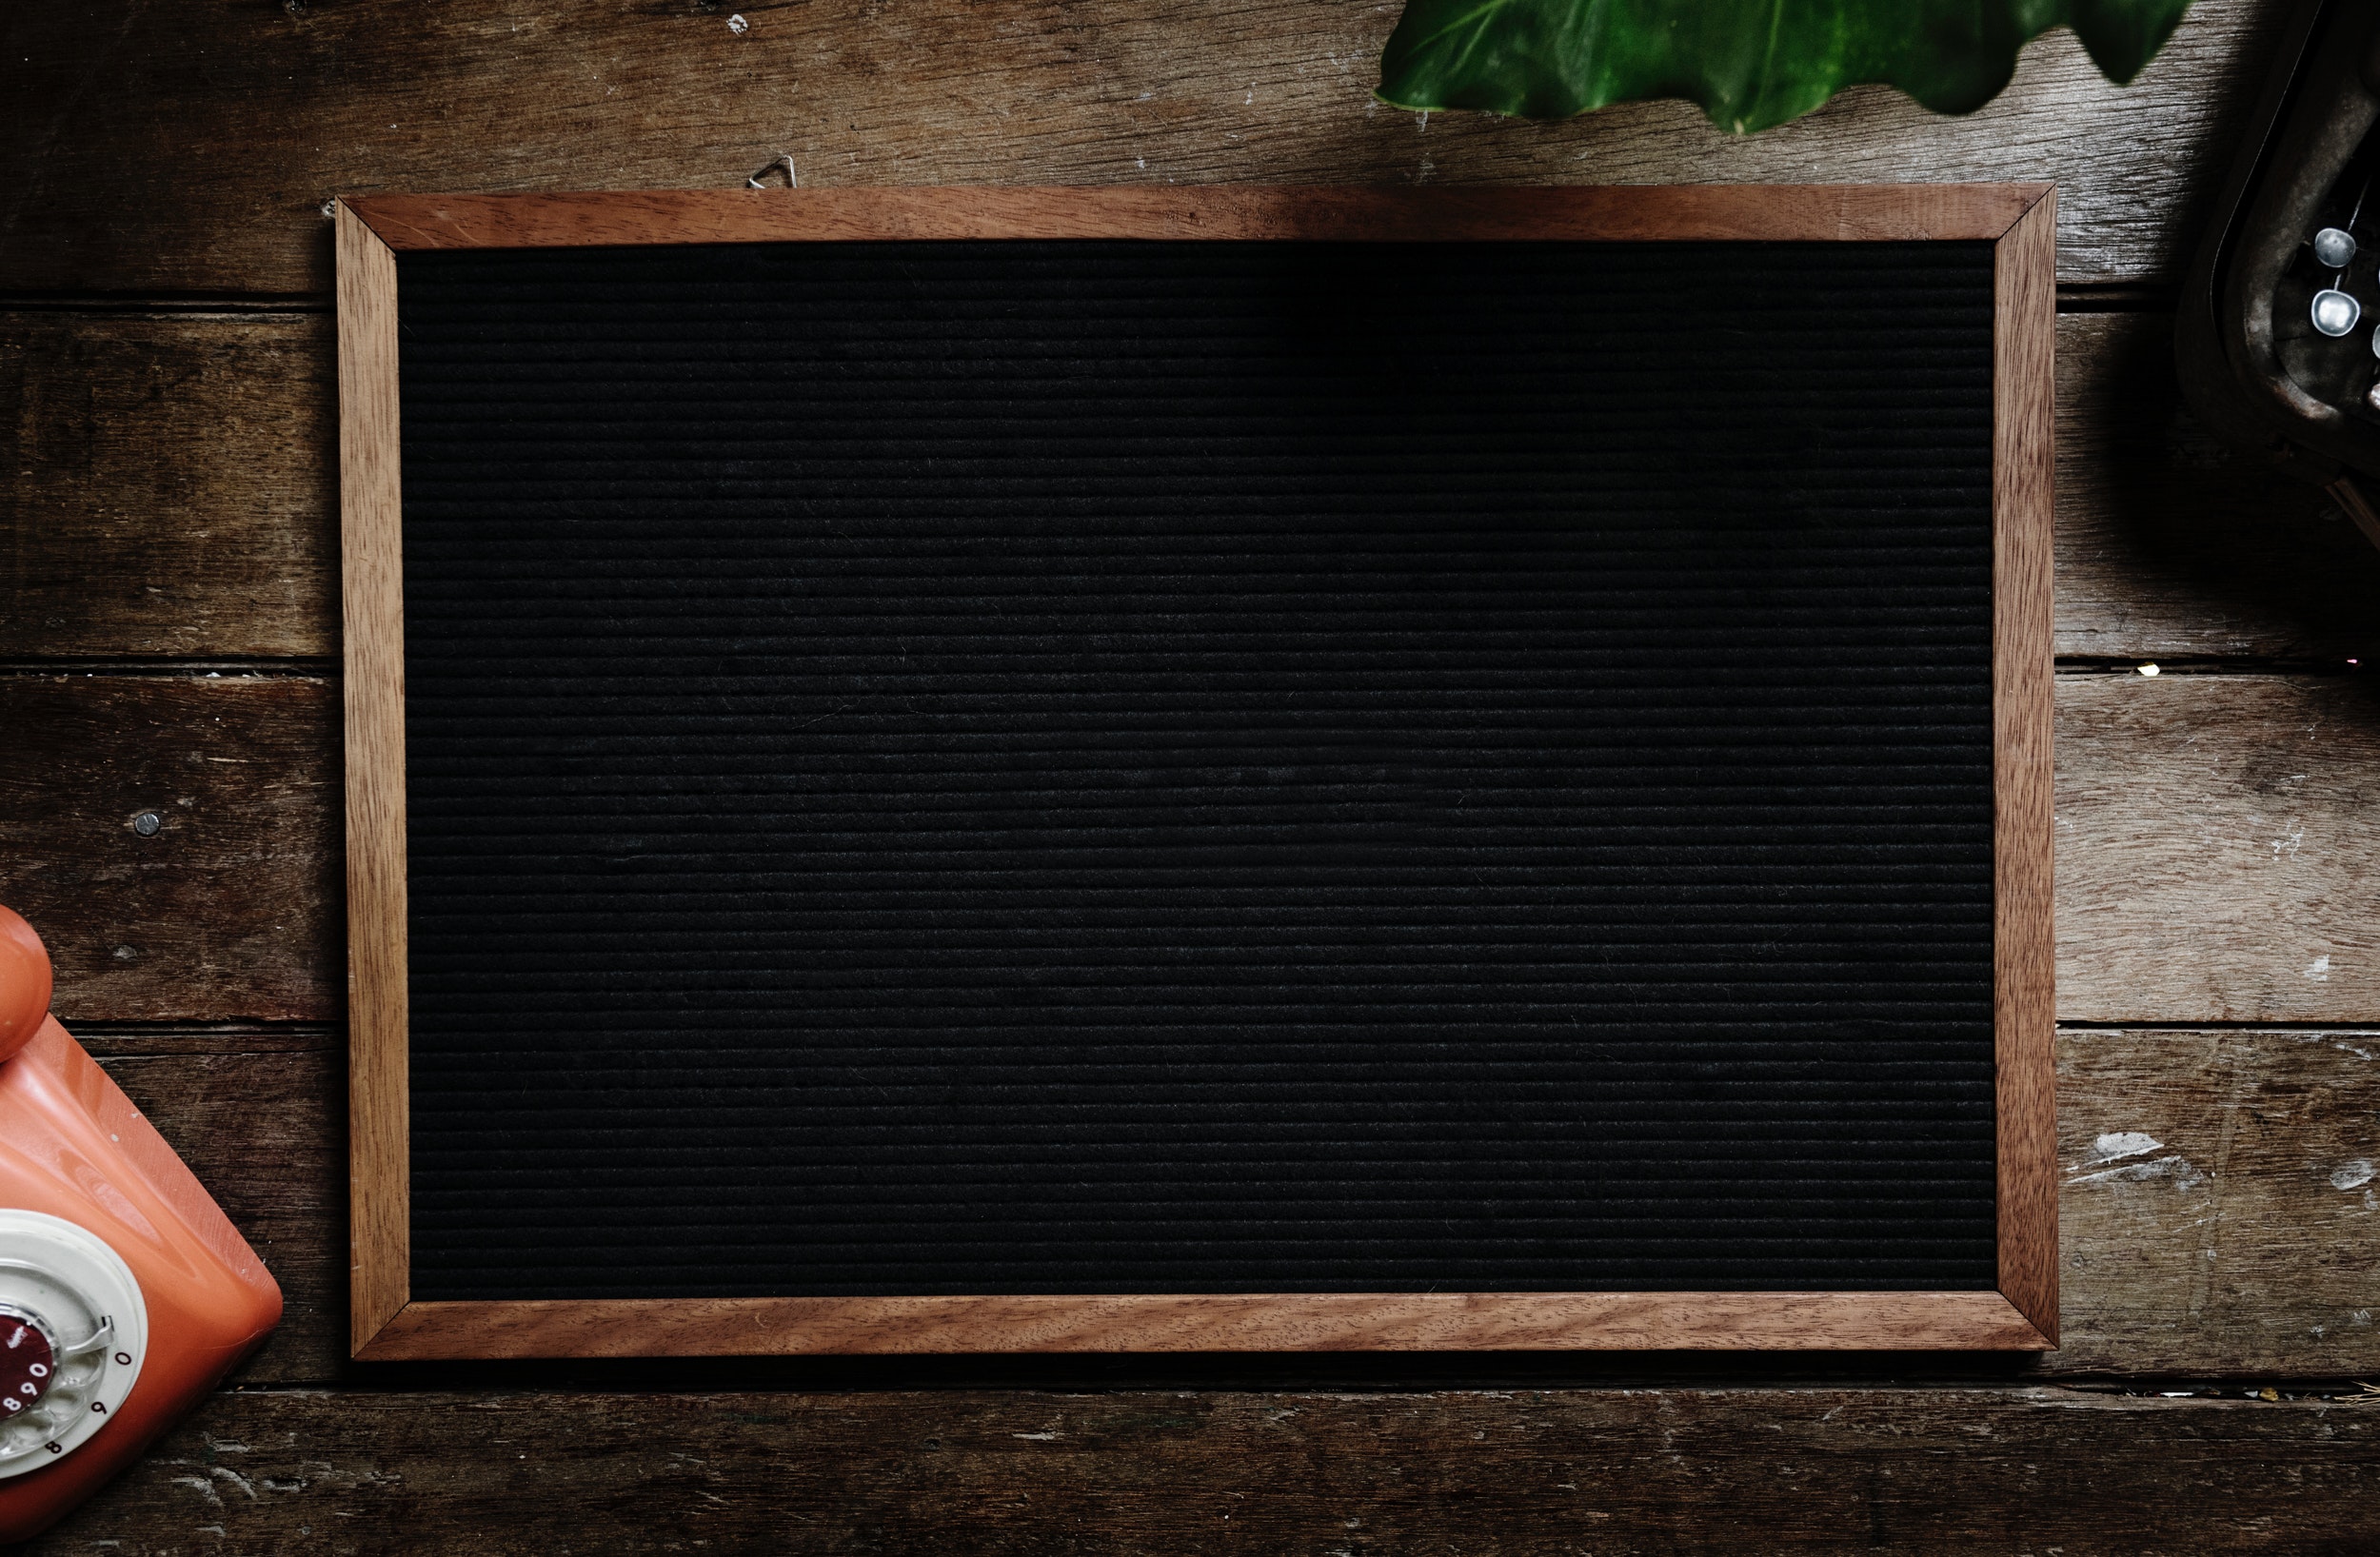 A blank black chalkboard on a wooden table.